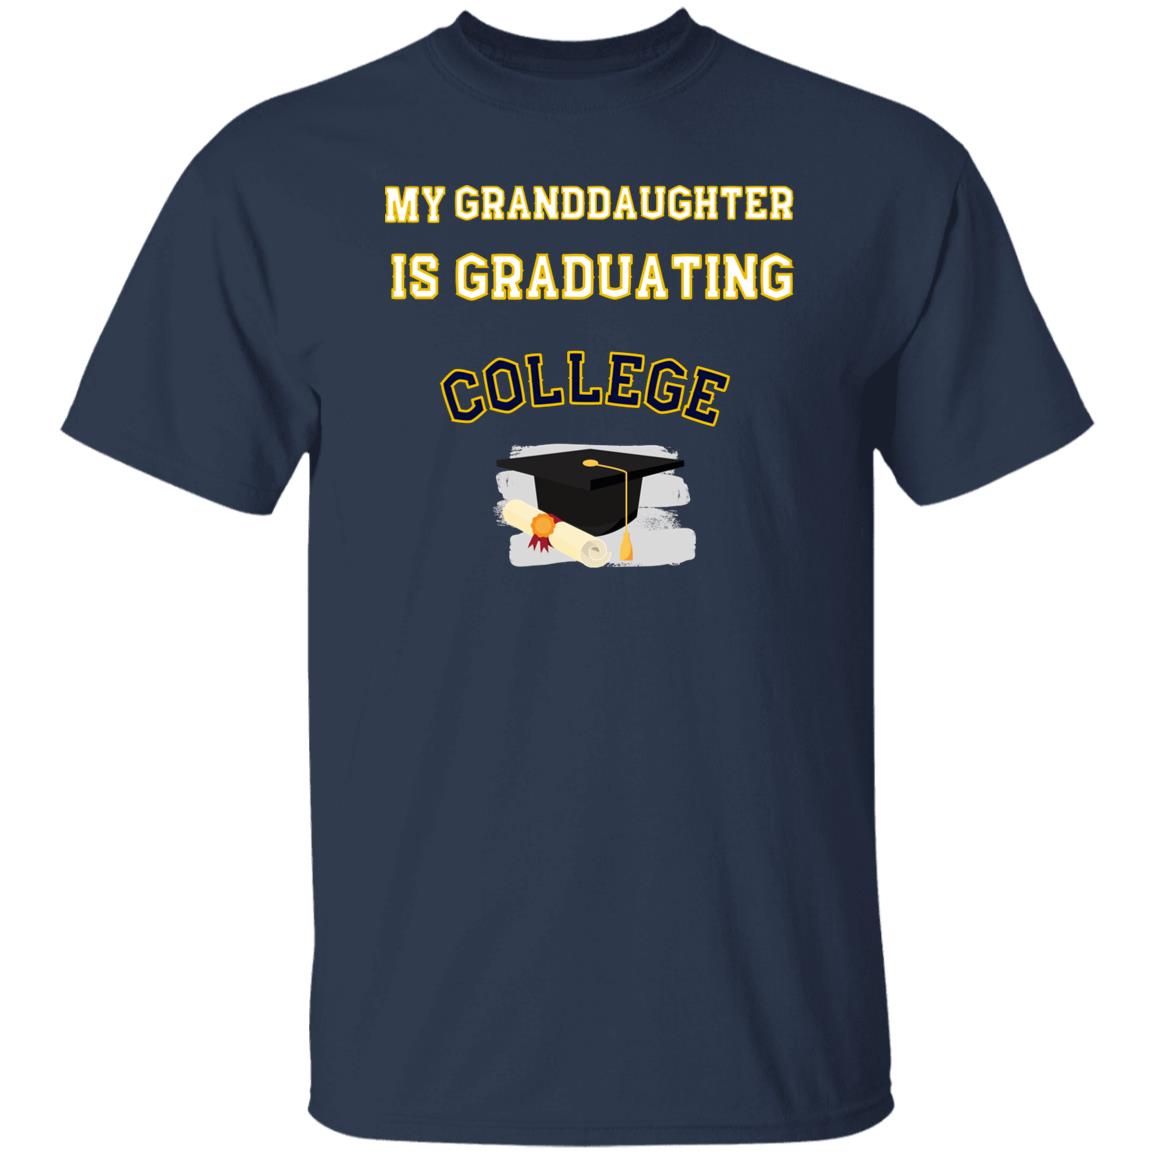 My Granddaughter is graduating College Tshirt